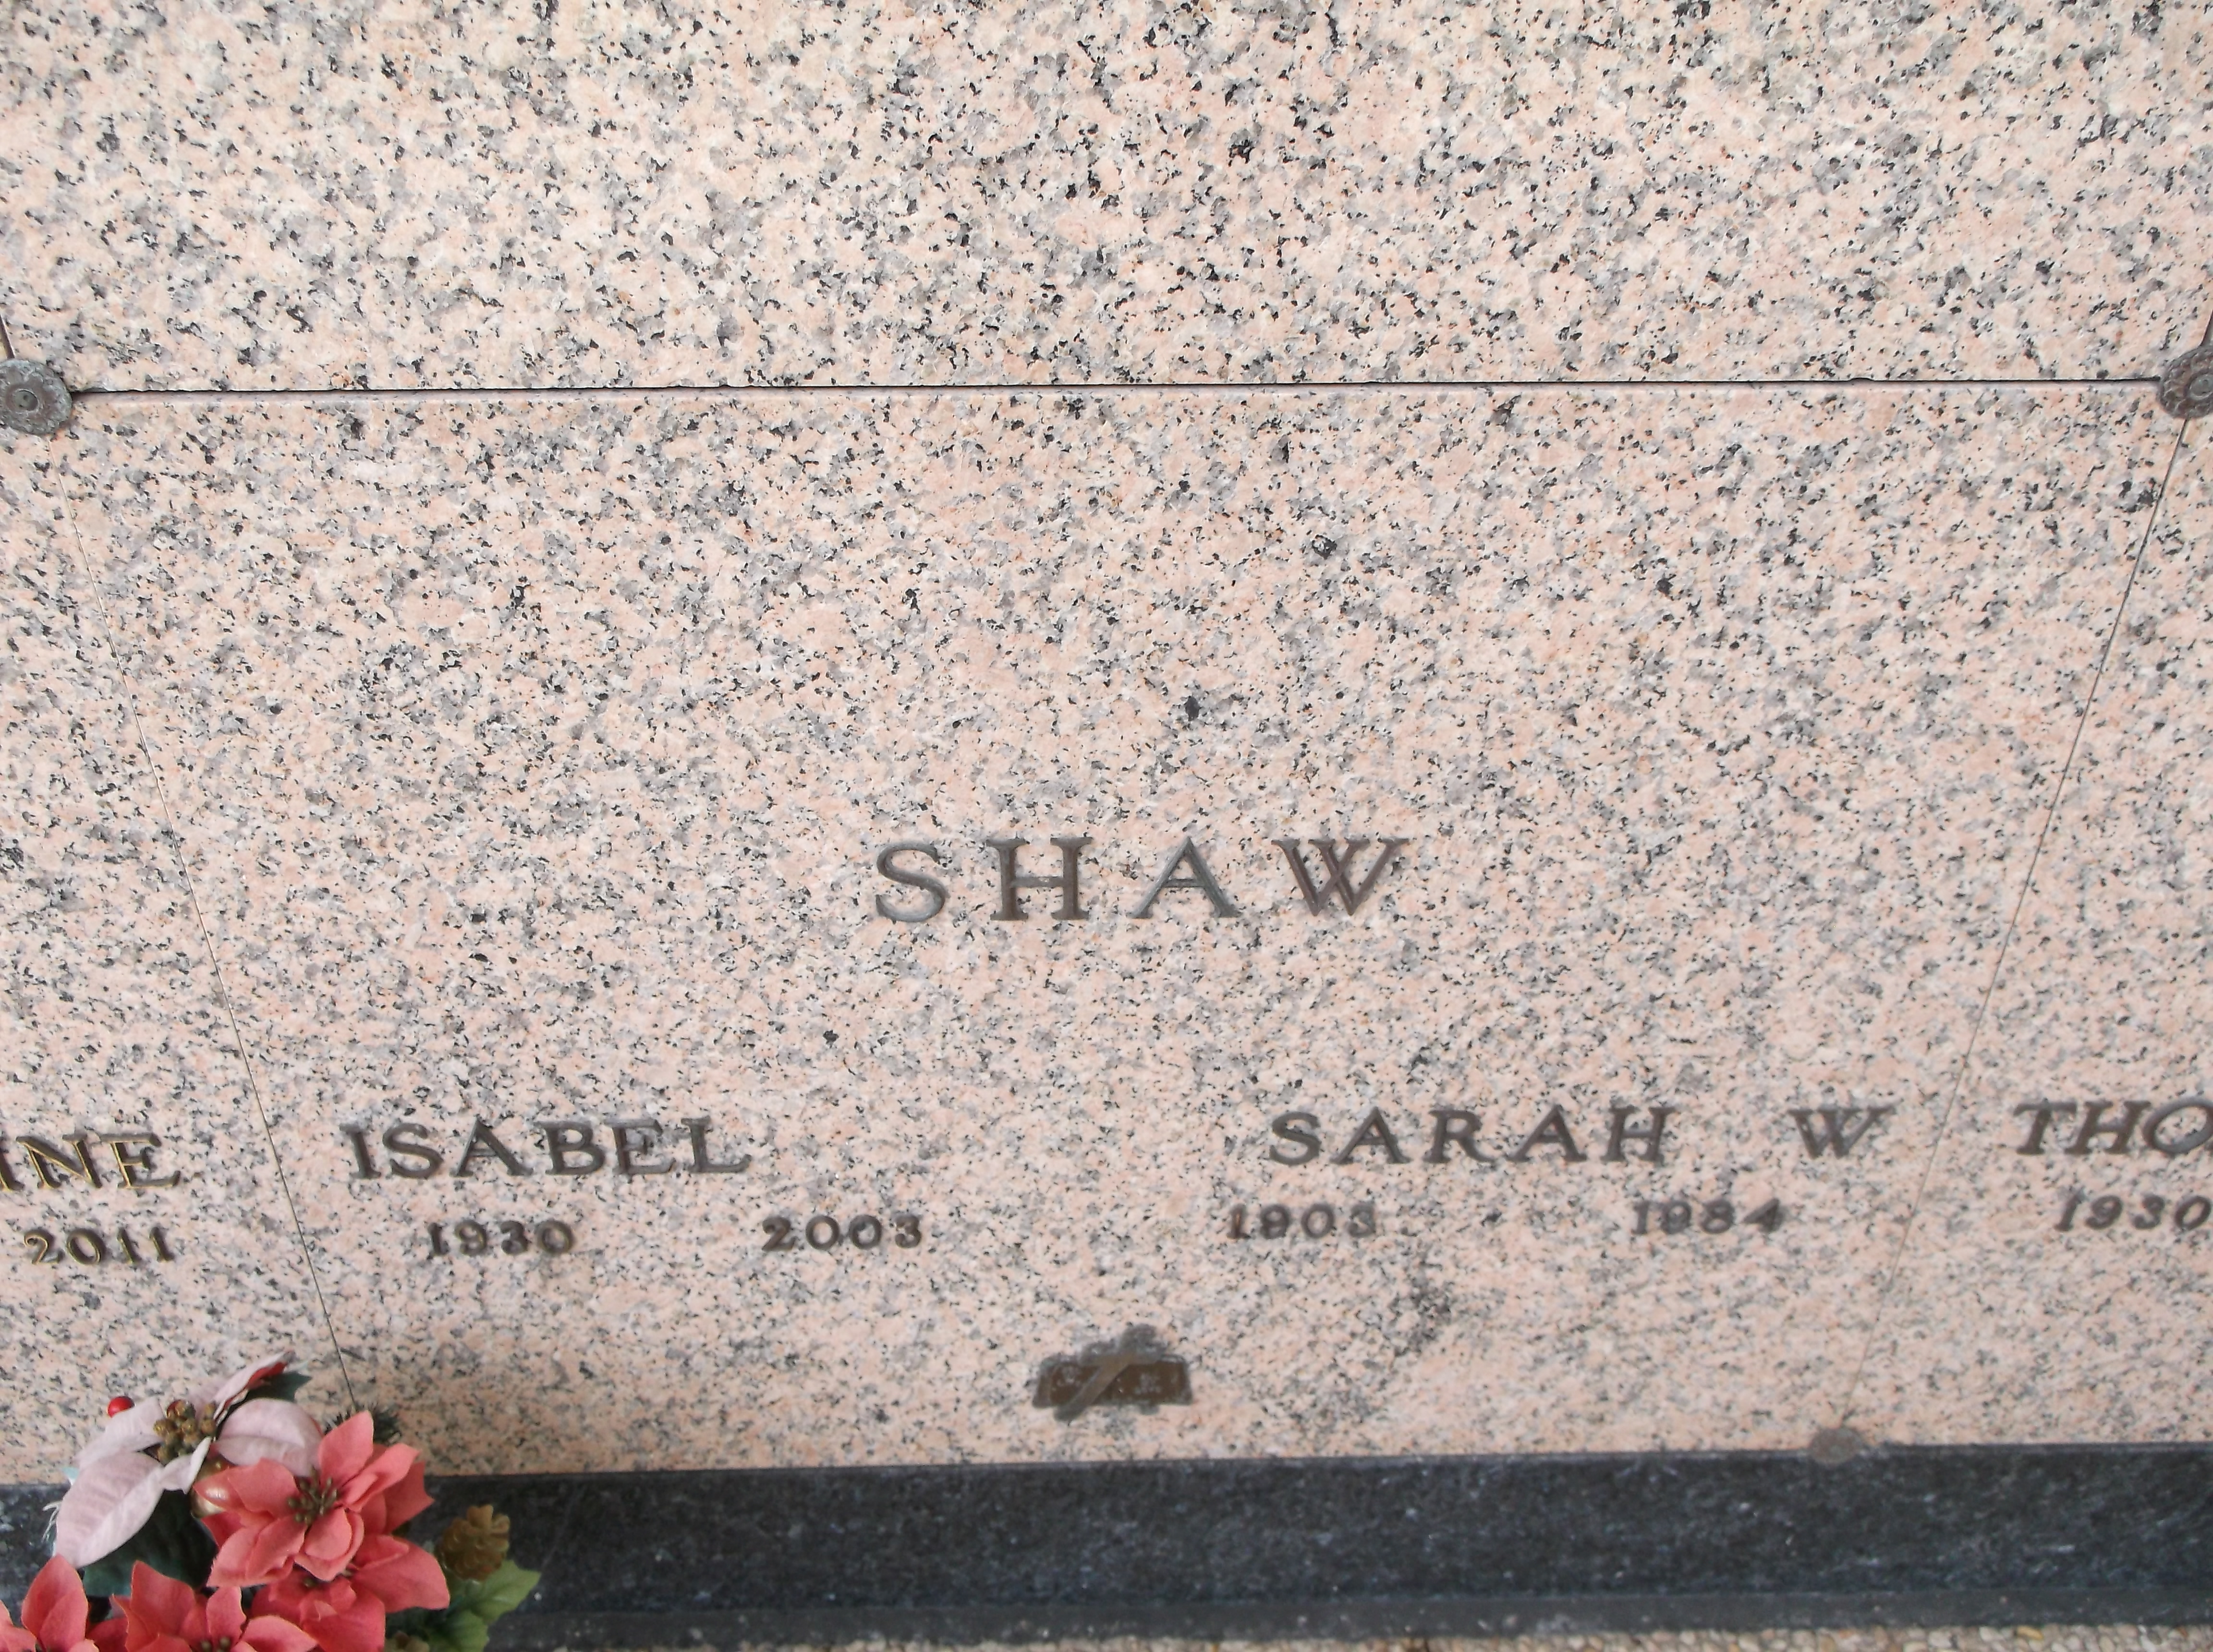 Sarah W Shaw